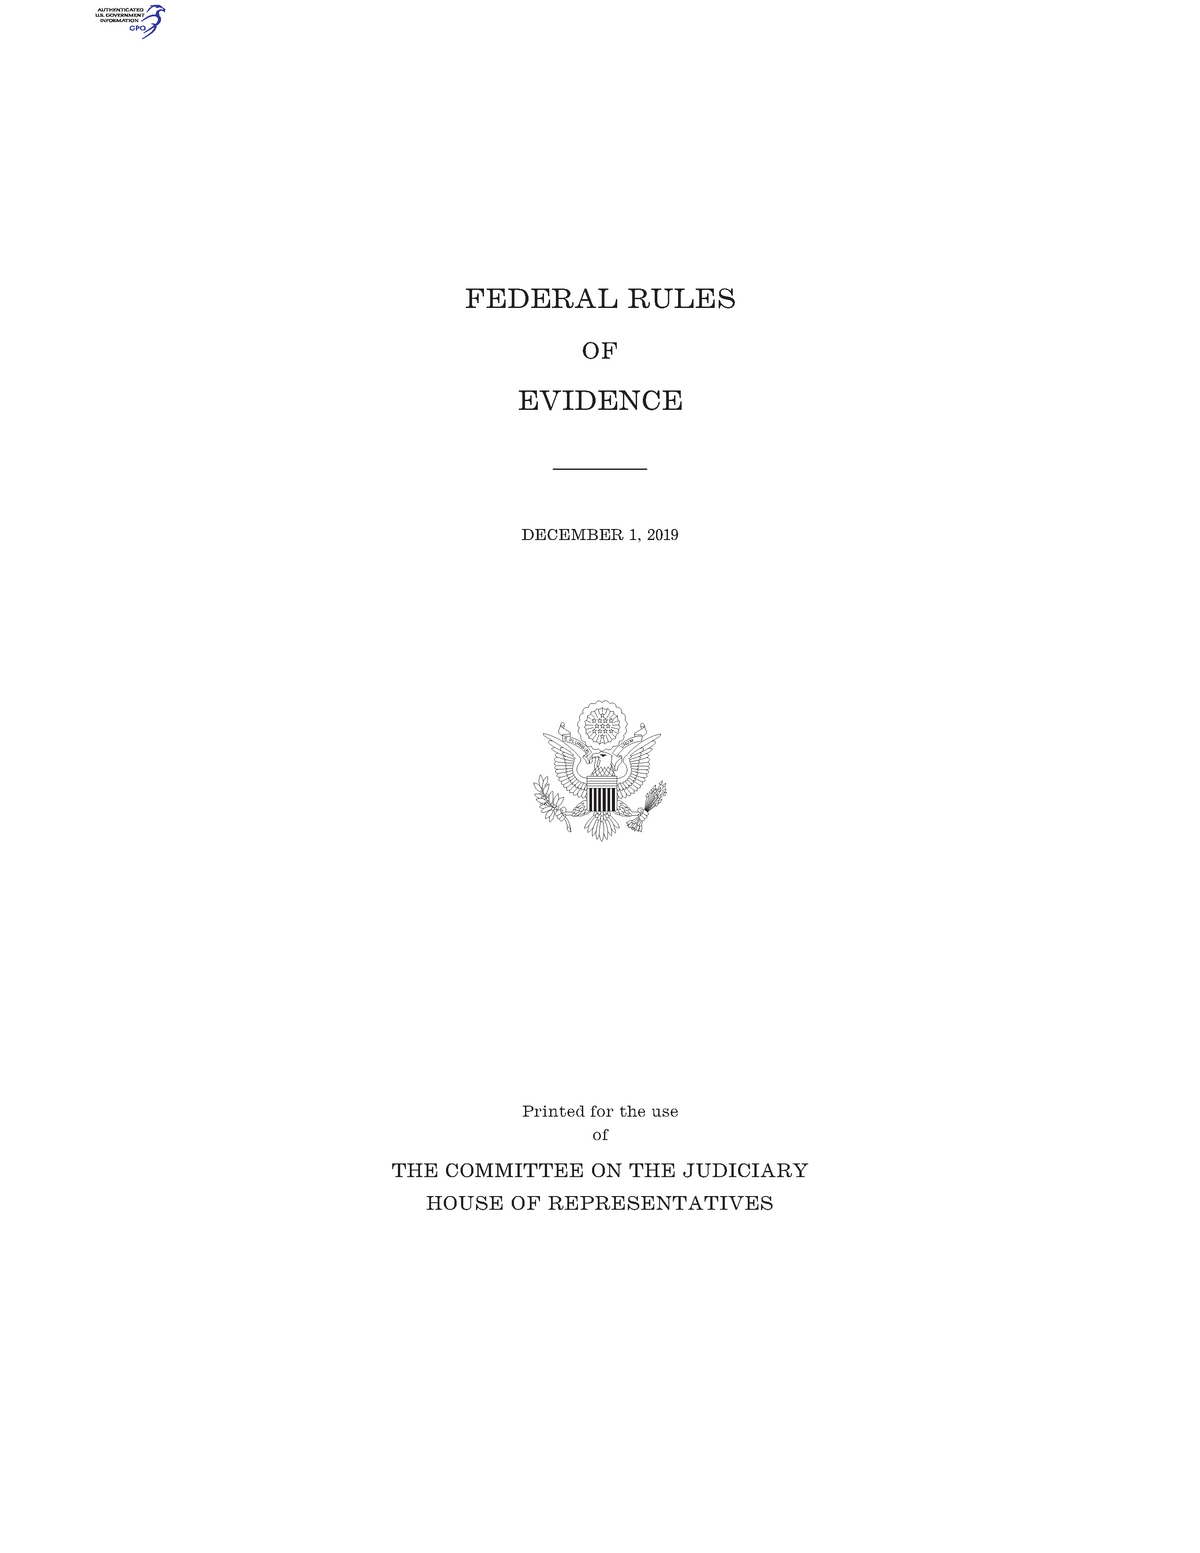 Federal Rules of Evidence FEDERAL RULES OF EVIDENCE DECEMBER 1, 2019